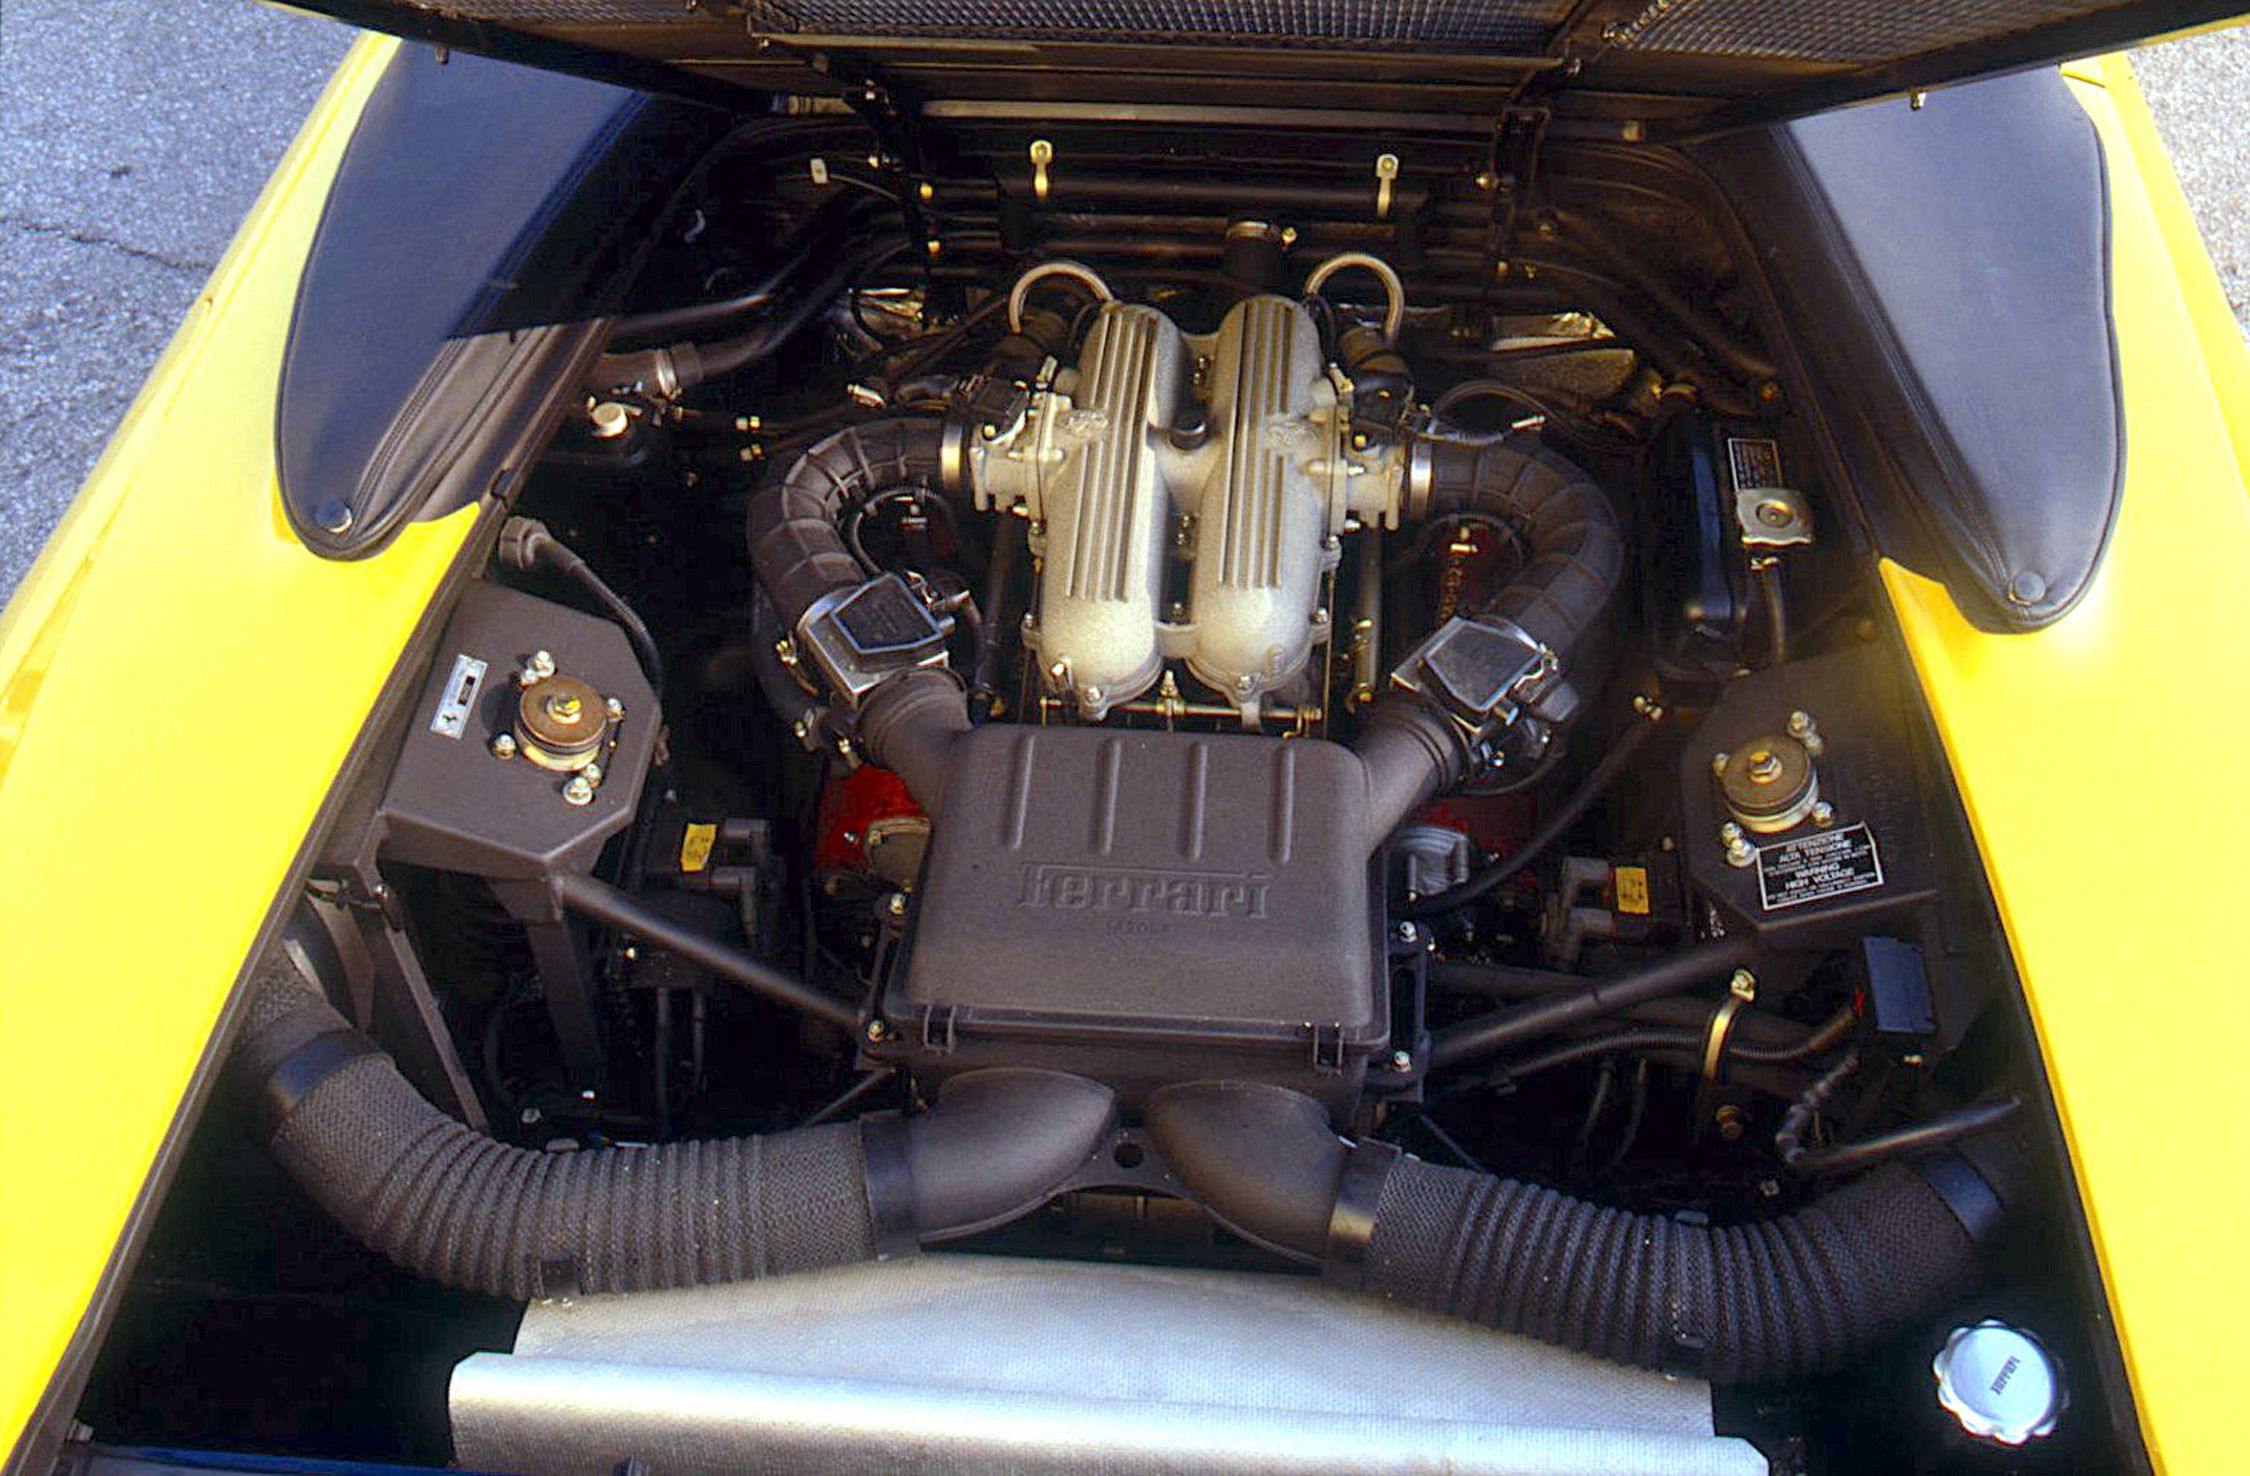 View Photos of the 1993 Ferrari 348 Spider